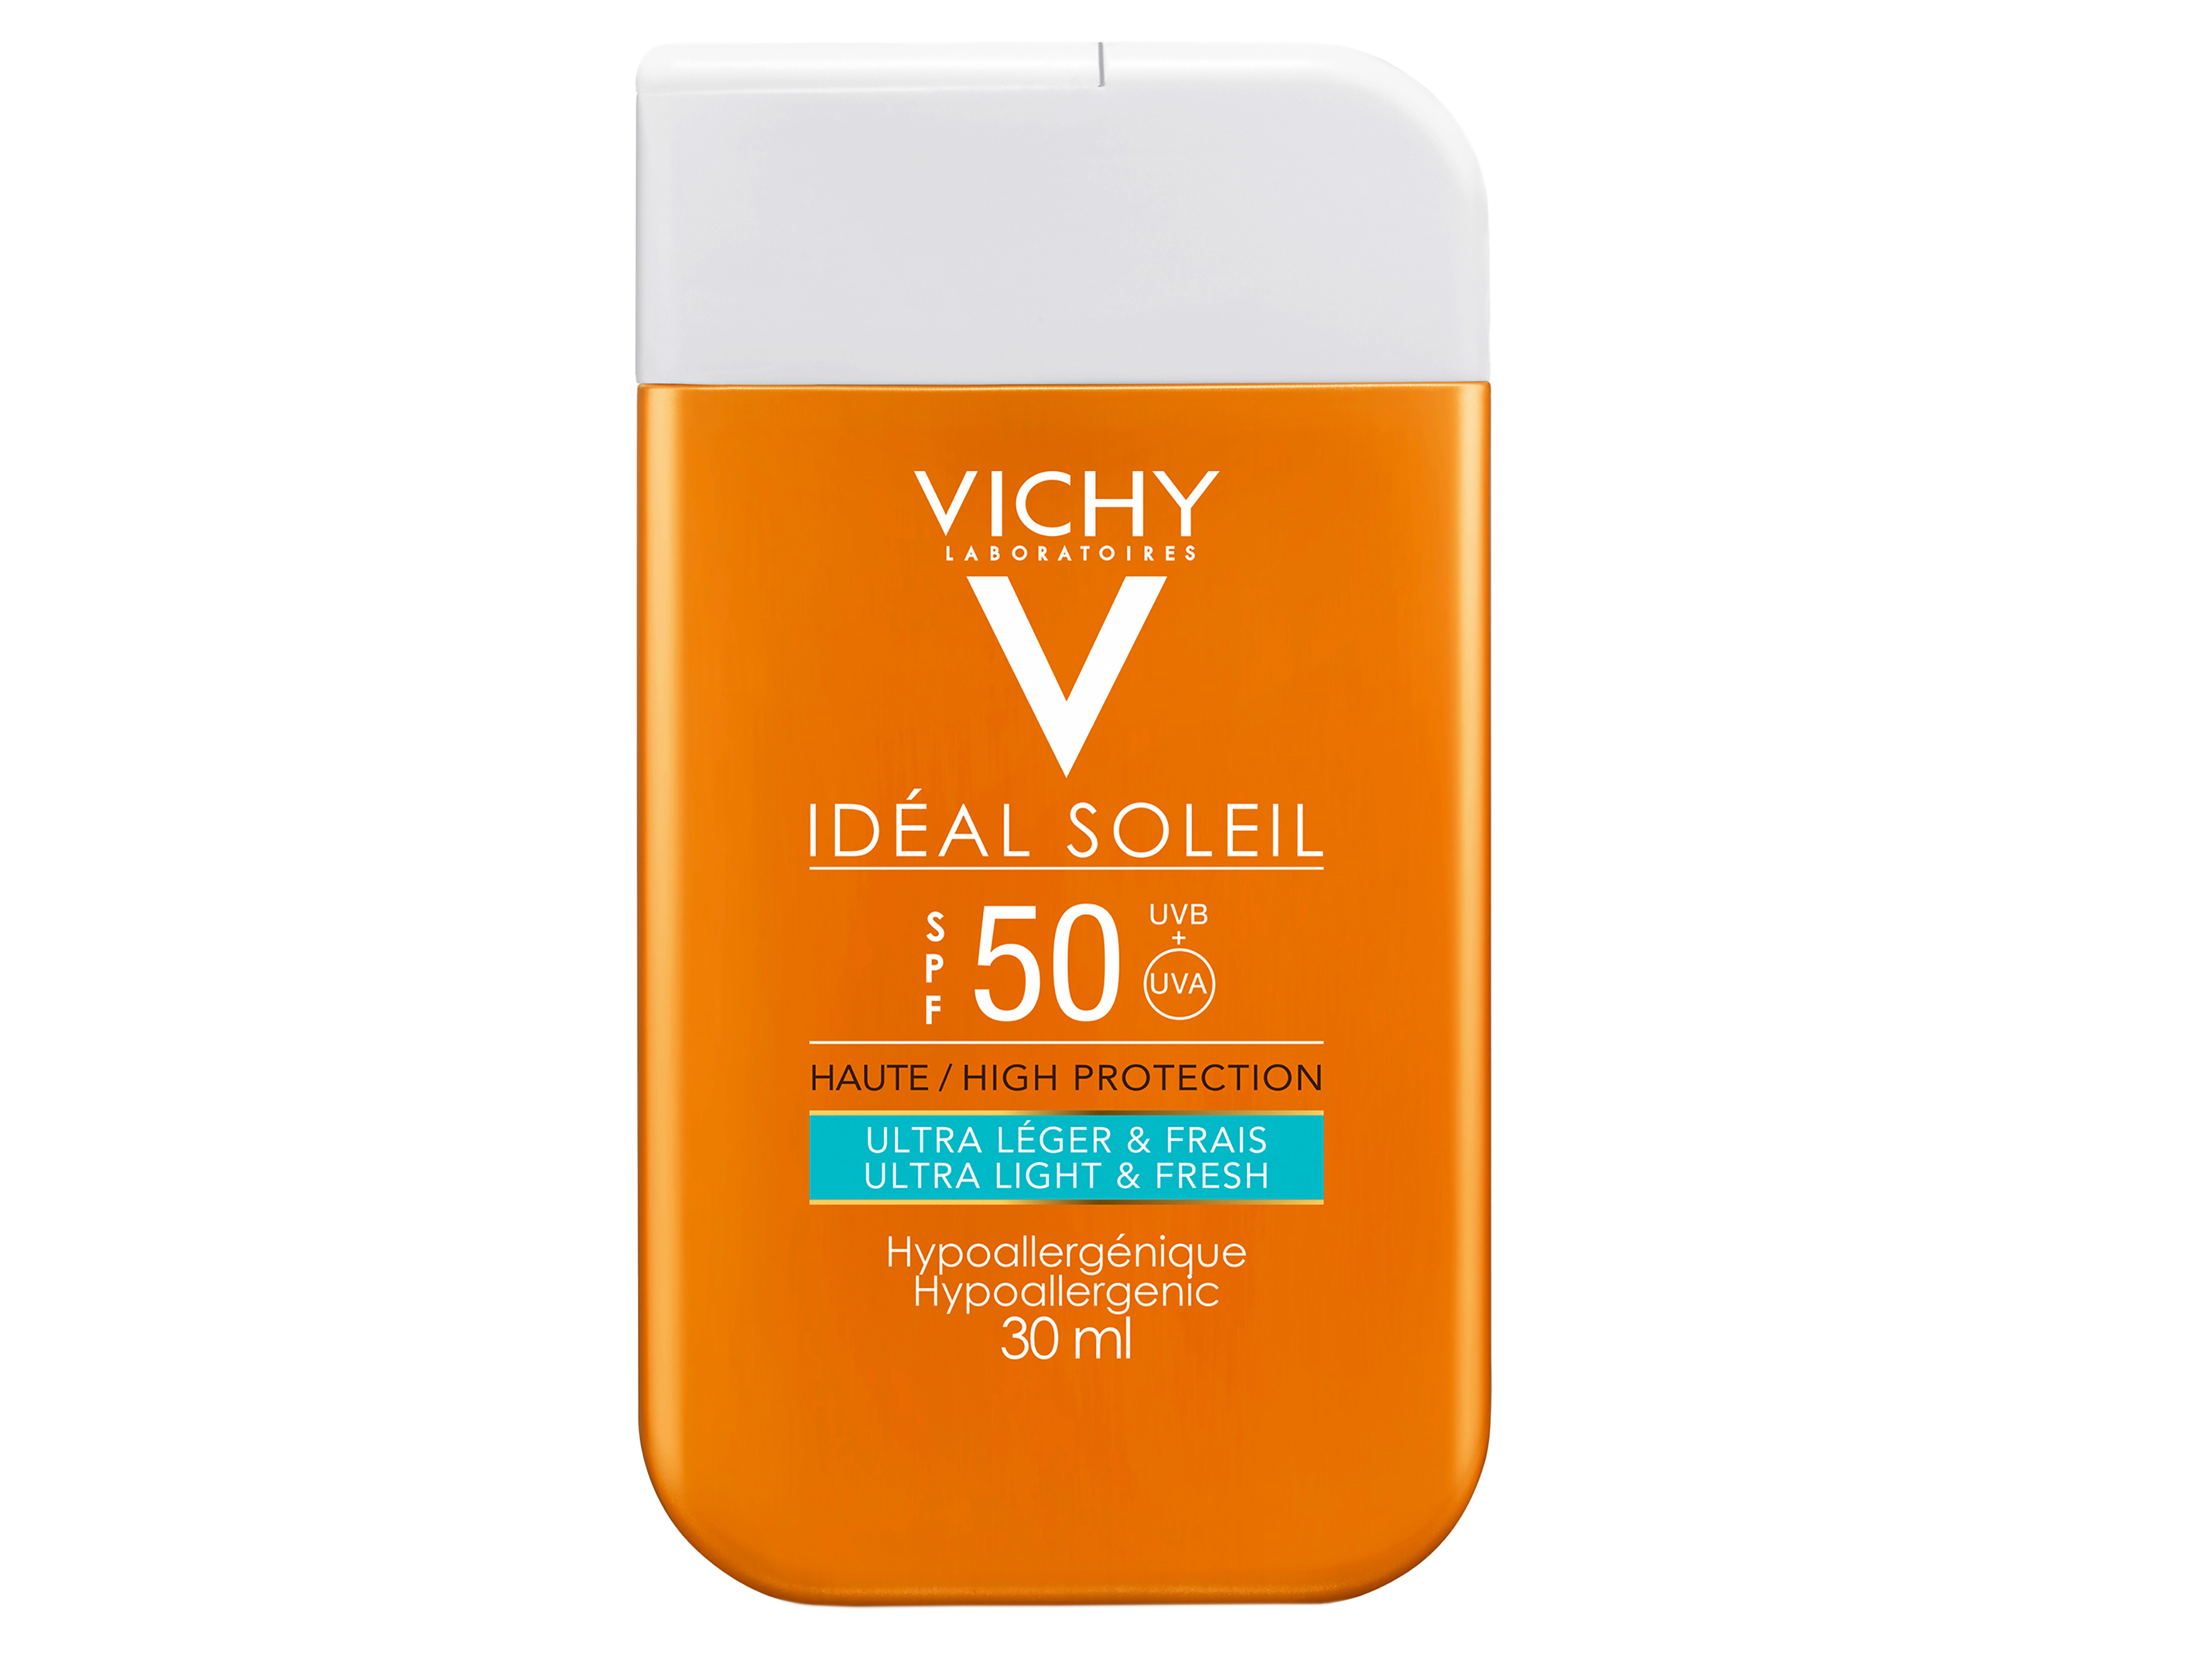 Vichy Ideal Soleil Pocket Size, SPF 50, 30 ml